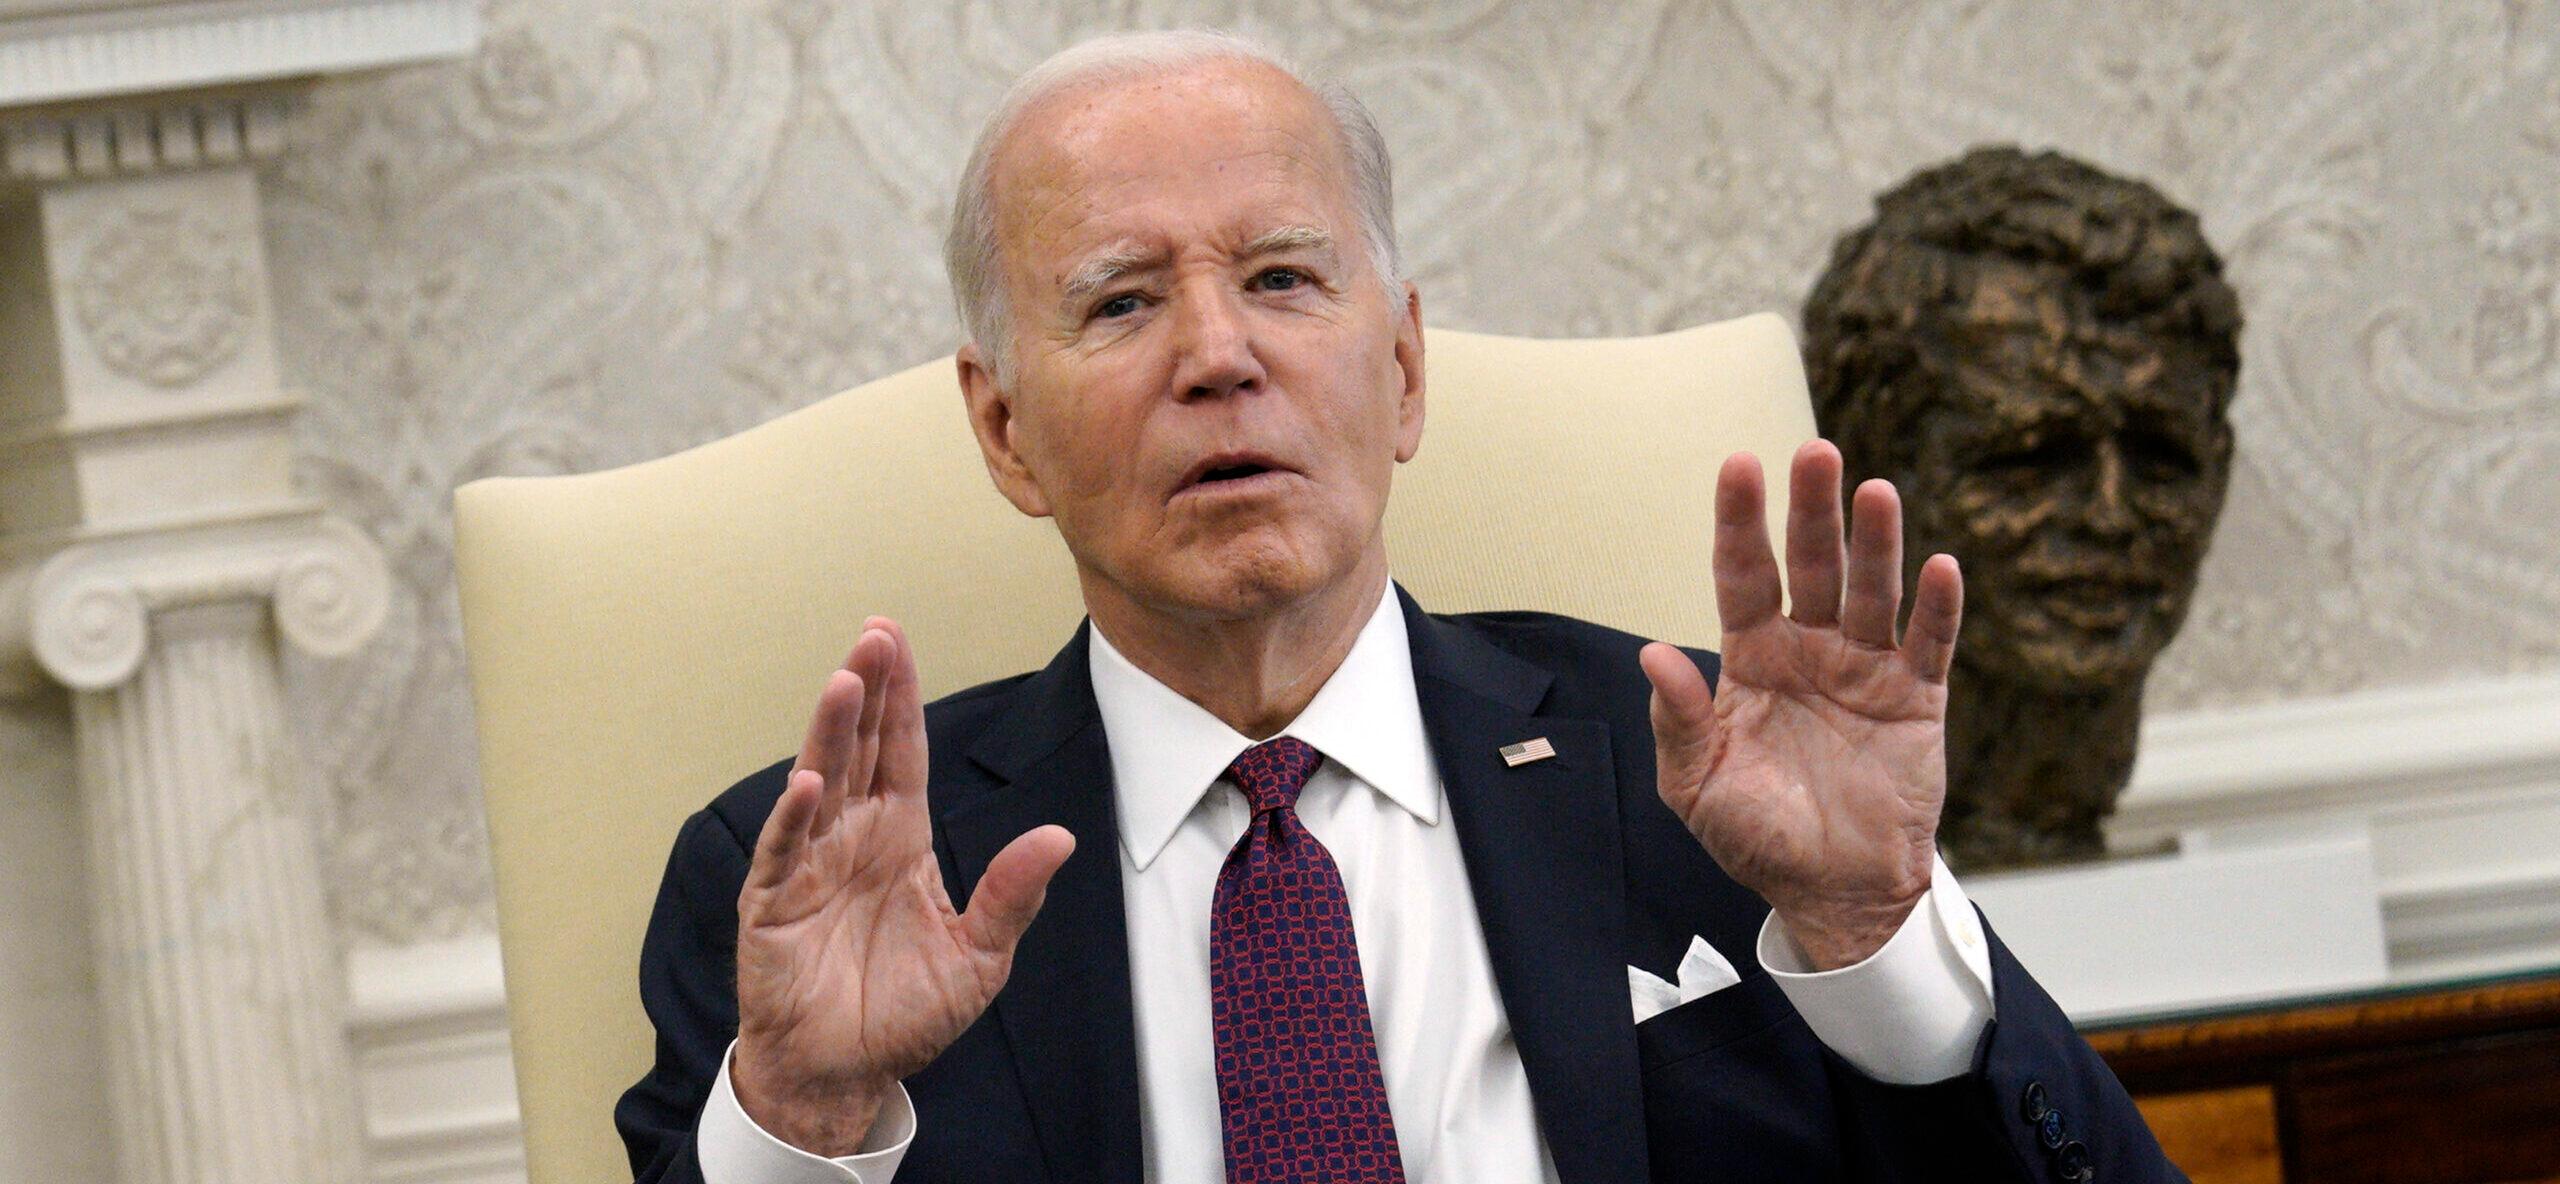 Netizens Say Joe Biden ‘Needs To Resign’ Following ‘Pathetic’ Veterans Day Moment